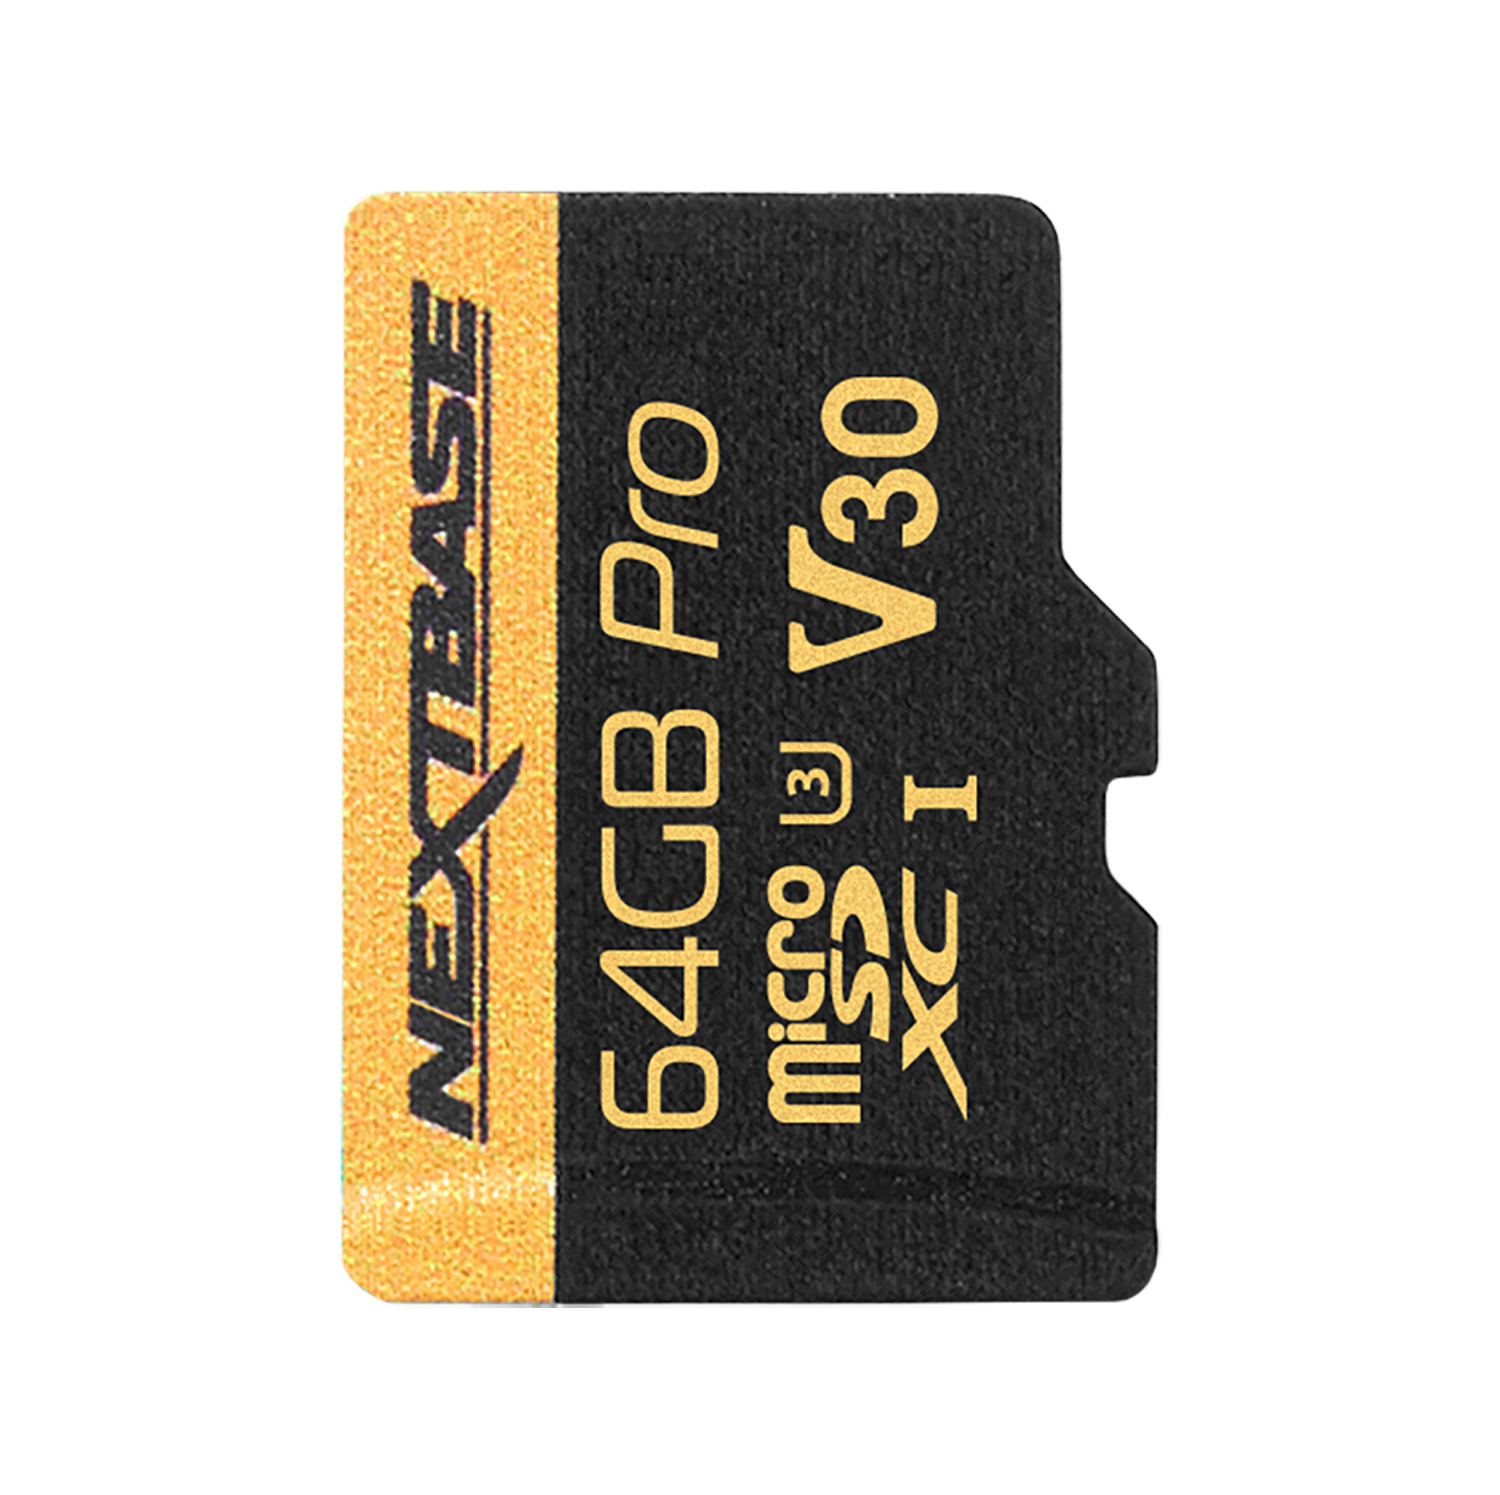 64GB Samsung Micro SD Card For Nextbase 222 312GW 412GW 512GW